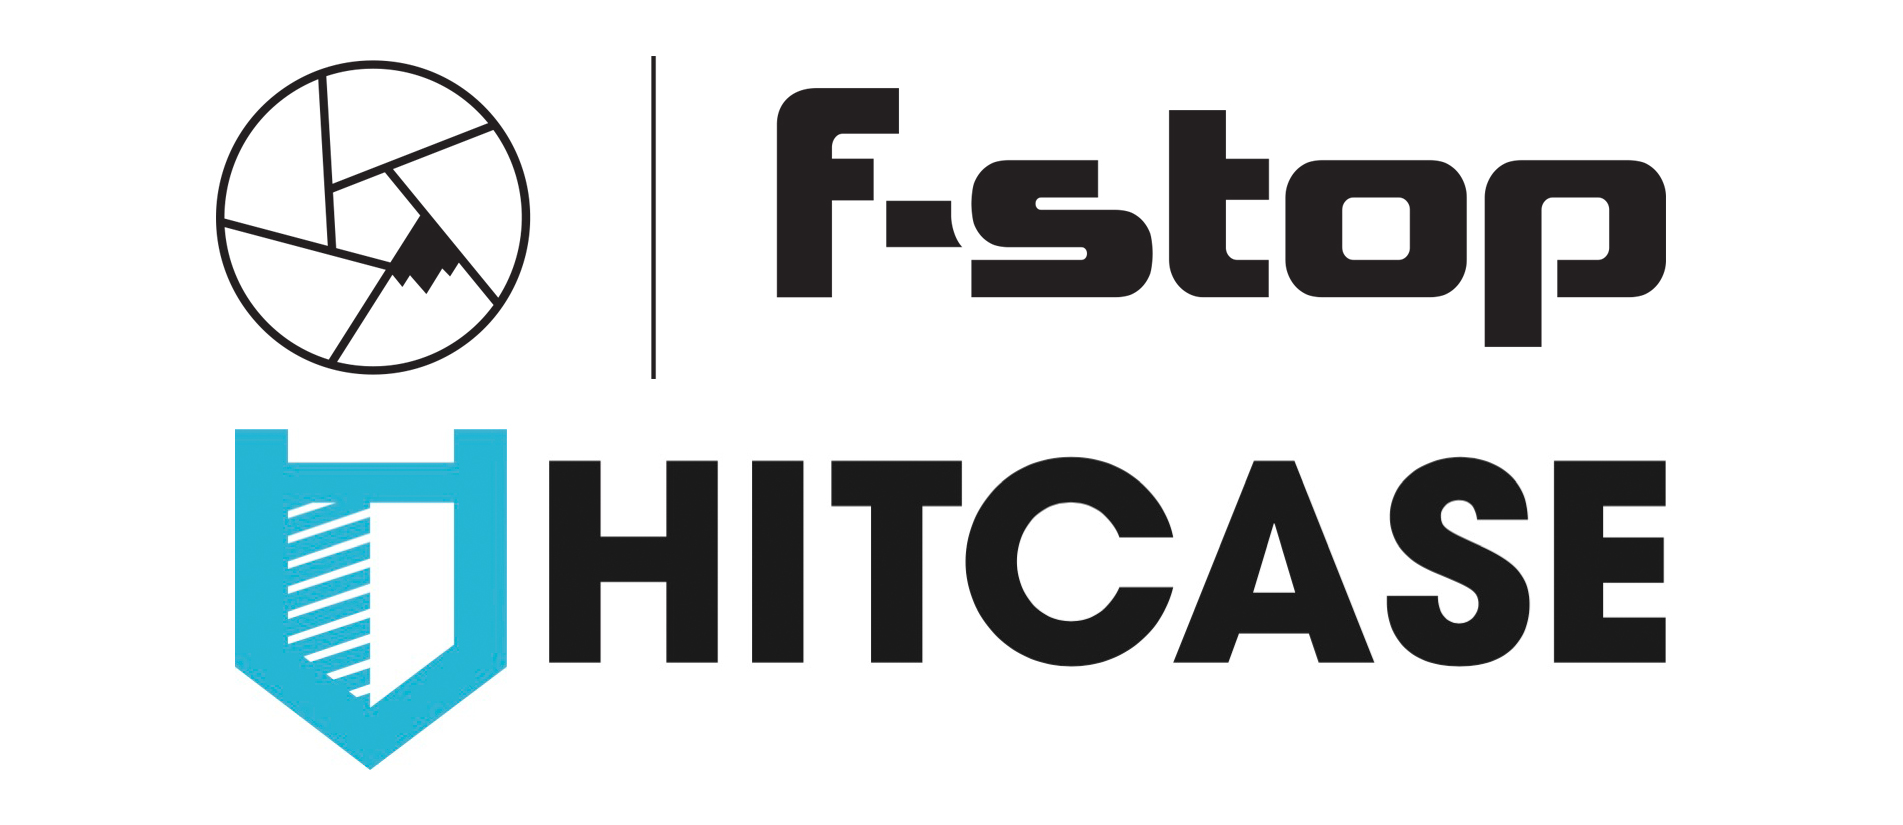 Fstop_Hitcase